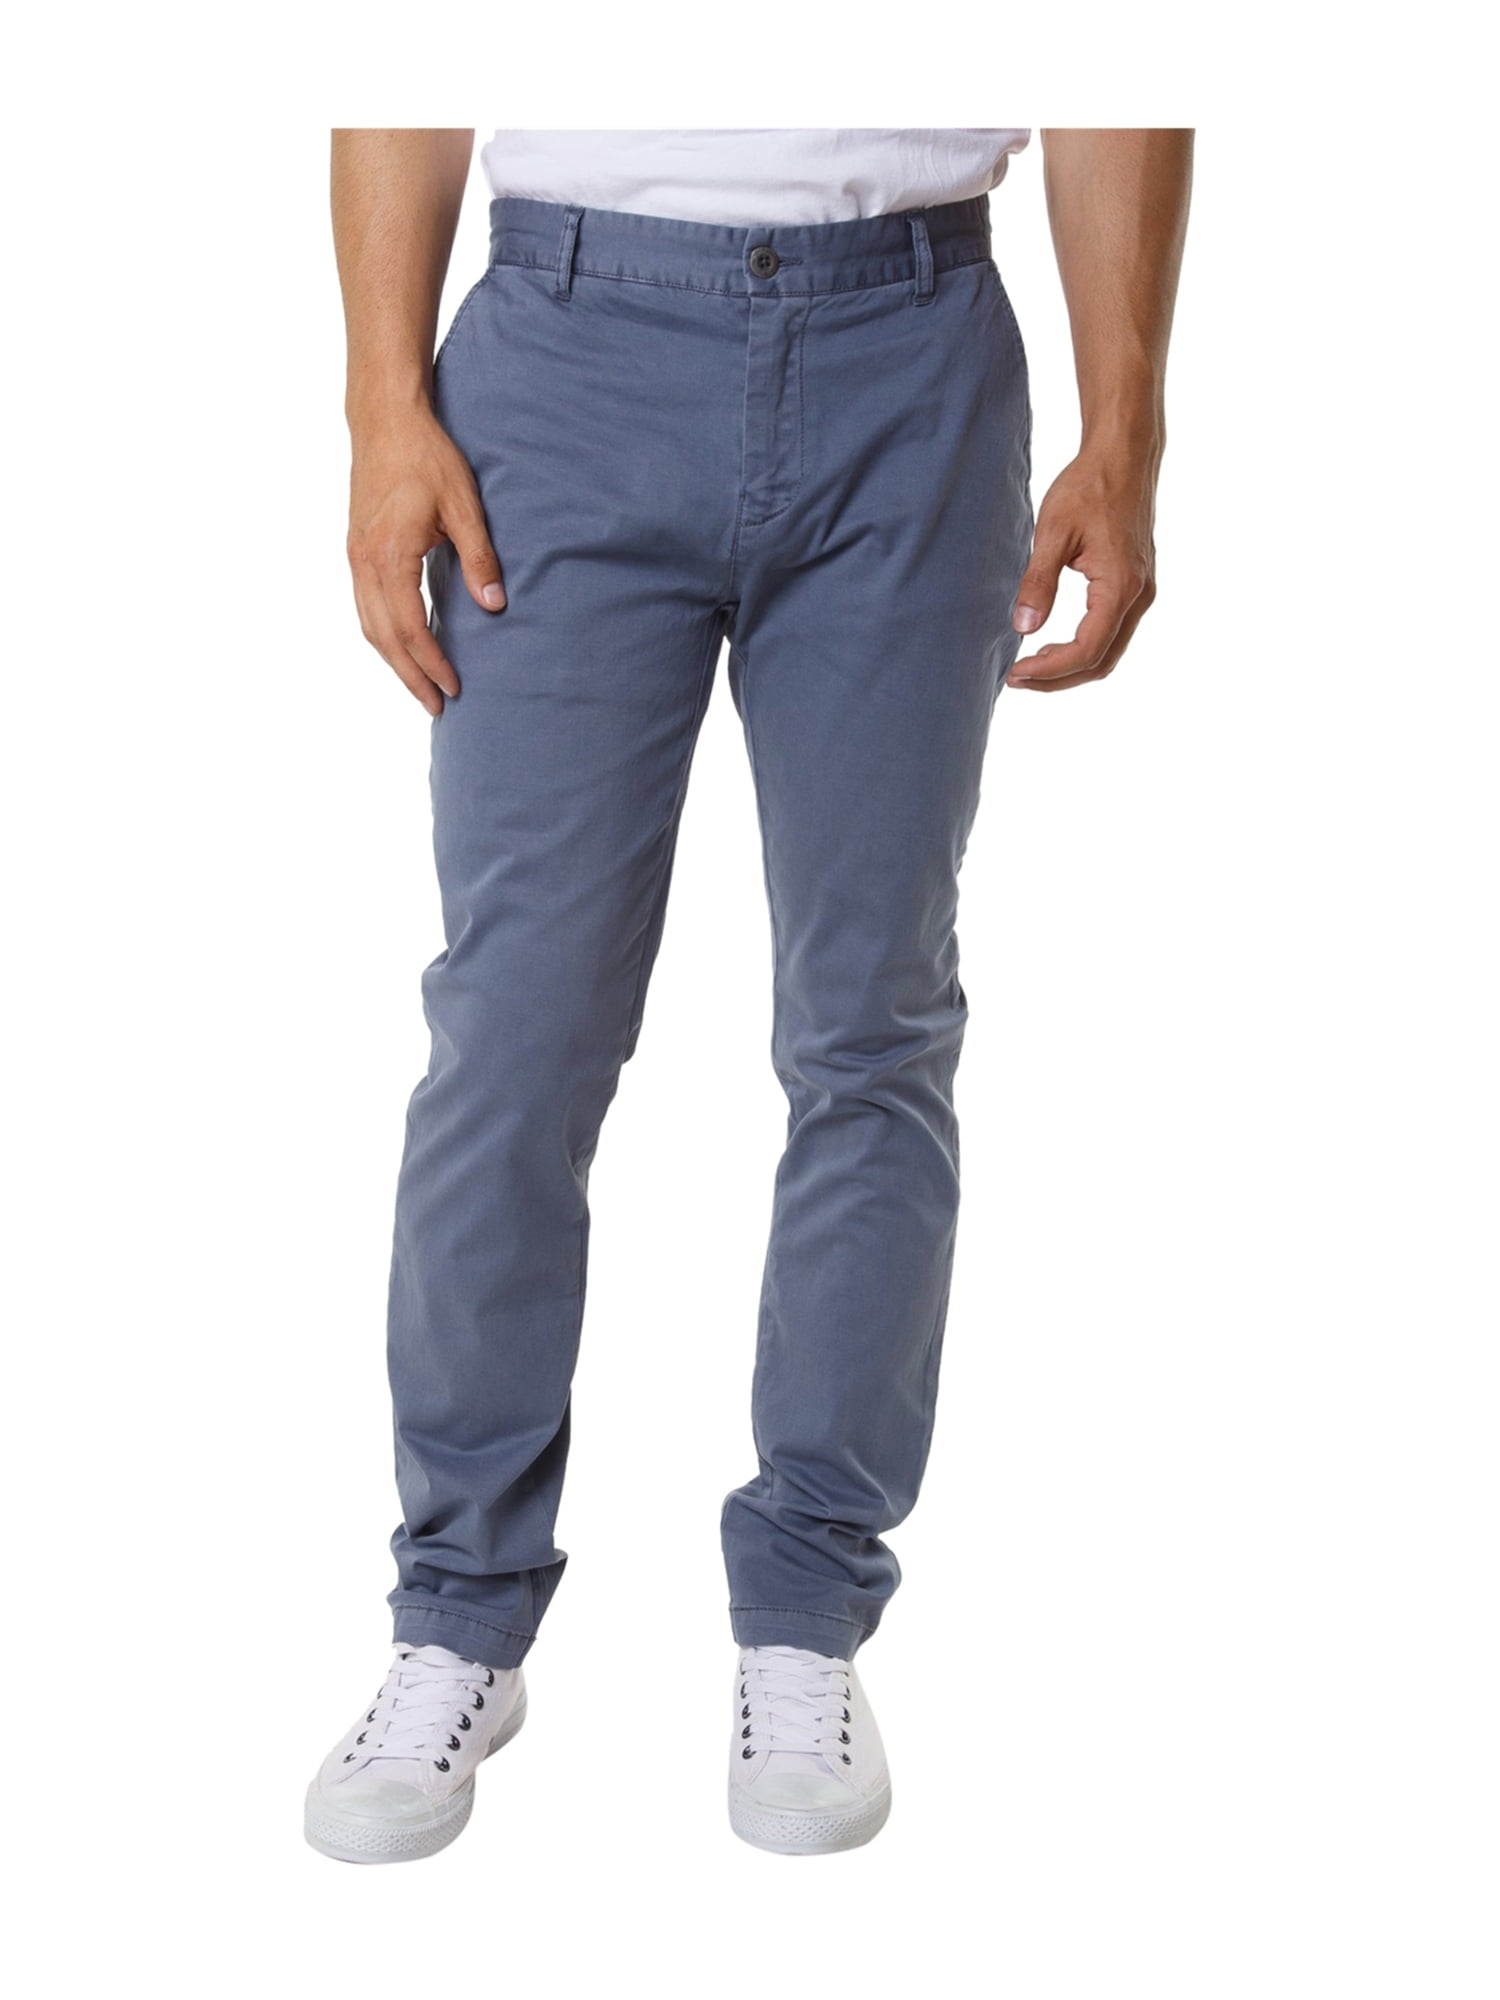 Paperbacks Mens Madison Casual Chino Pants slate 36x30 | Walmart Canada